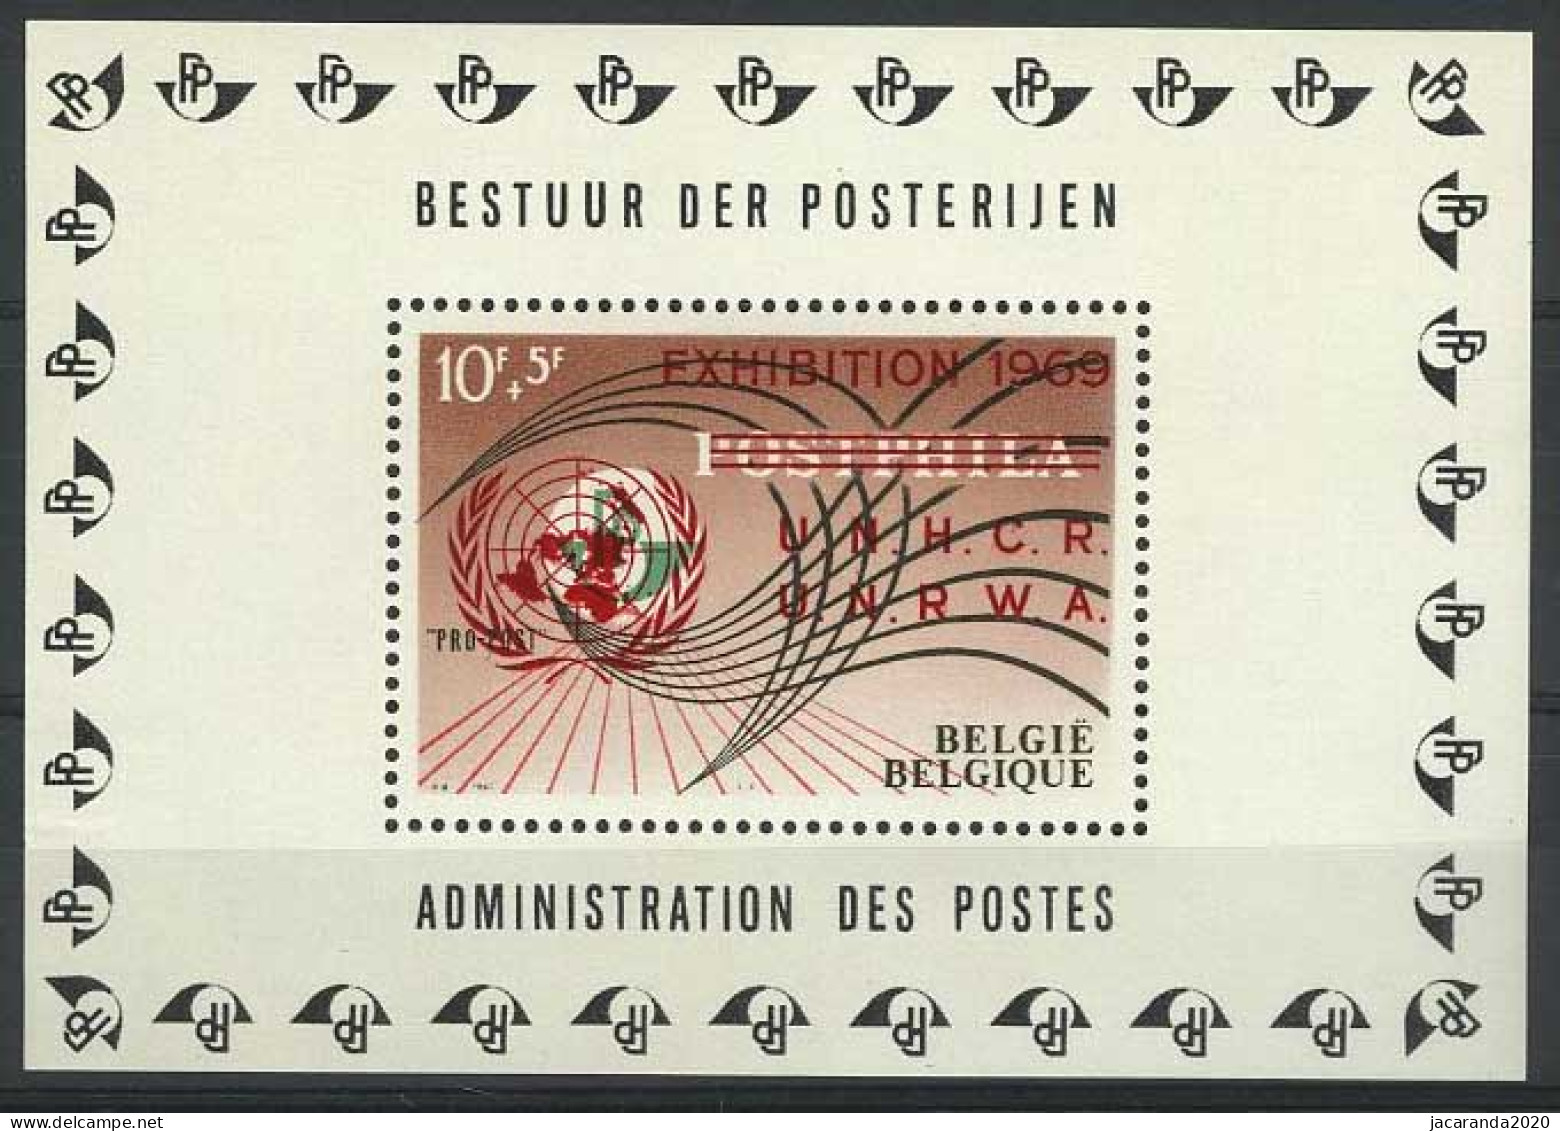 België PR148 ** - BL44 Met Opdruk "Exhibition 1969 U.N.R.W.A. - U.N.H.C.R." En Embleem Van De Verenigde Naties - Privat- Und Lokalpost [PR & LO]